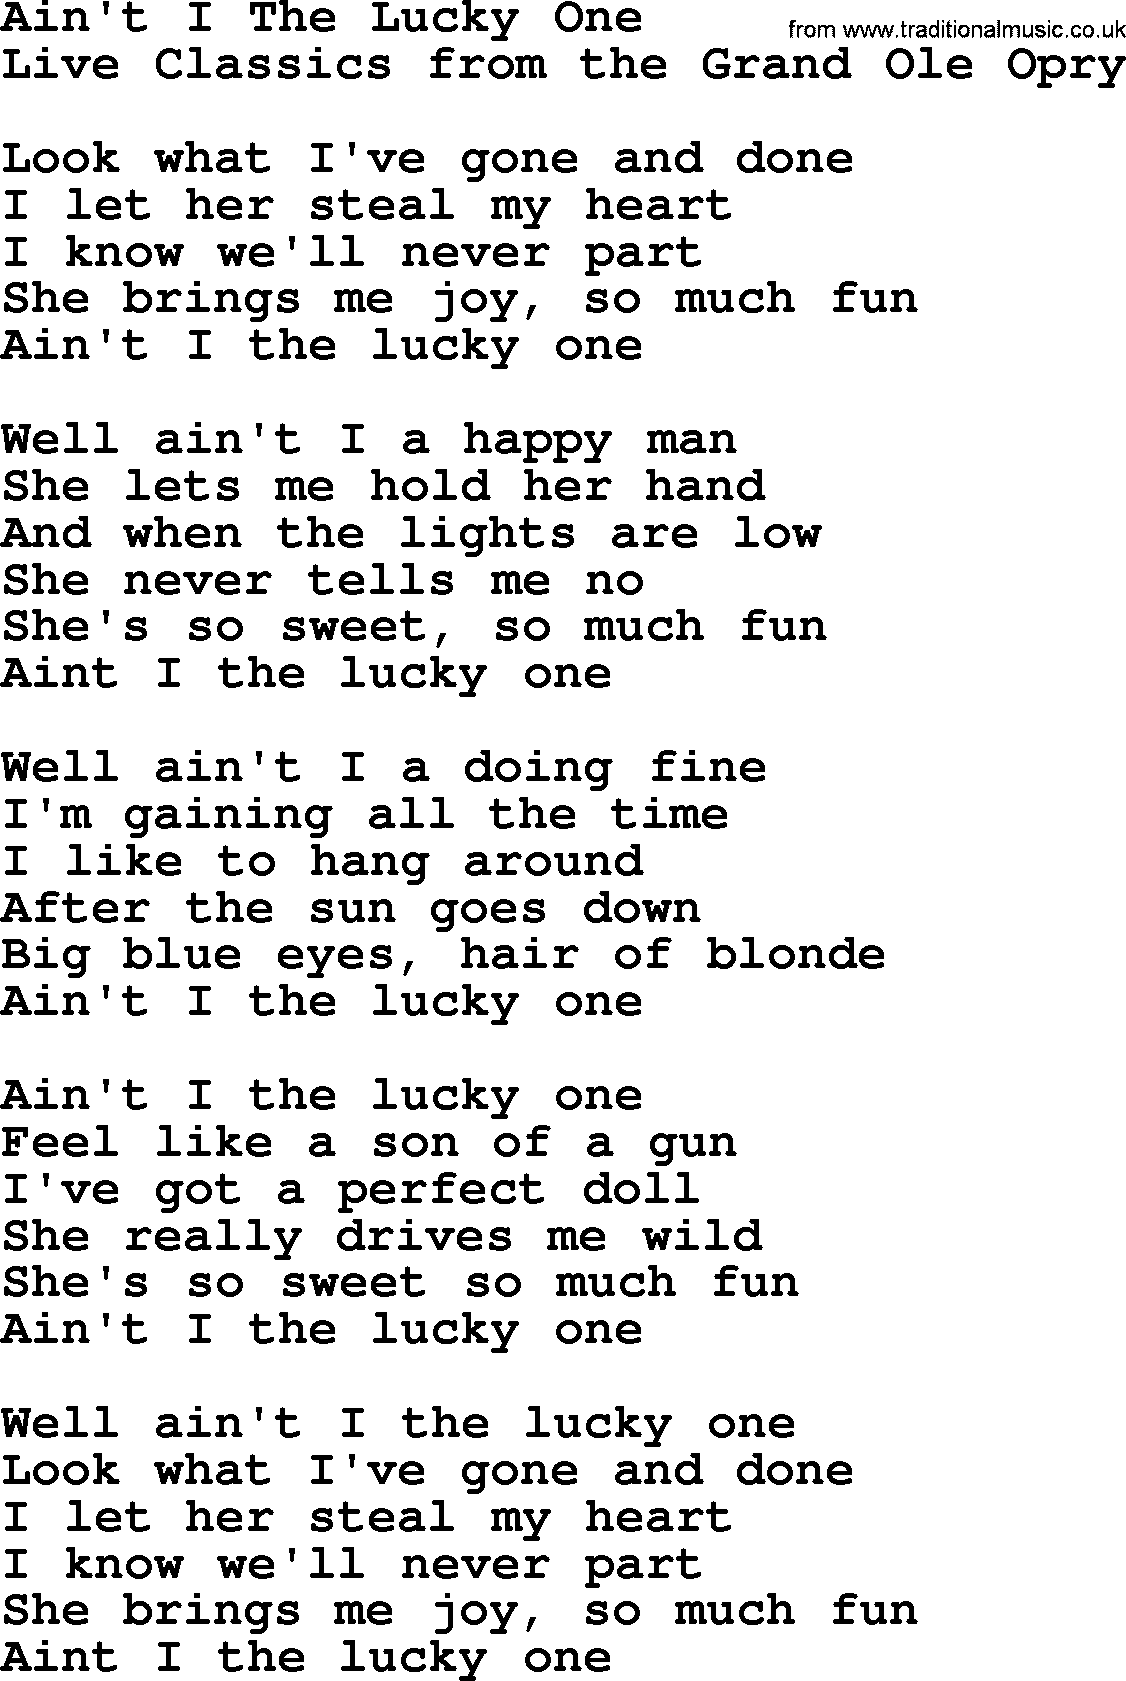 Marty Robbins song: Aint I The Lucky One, lyrics